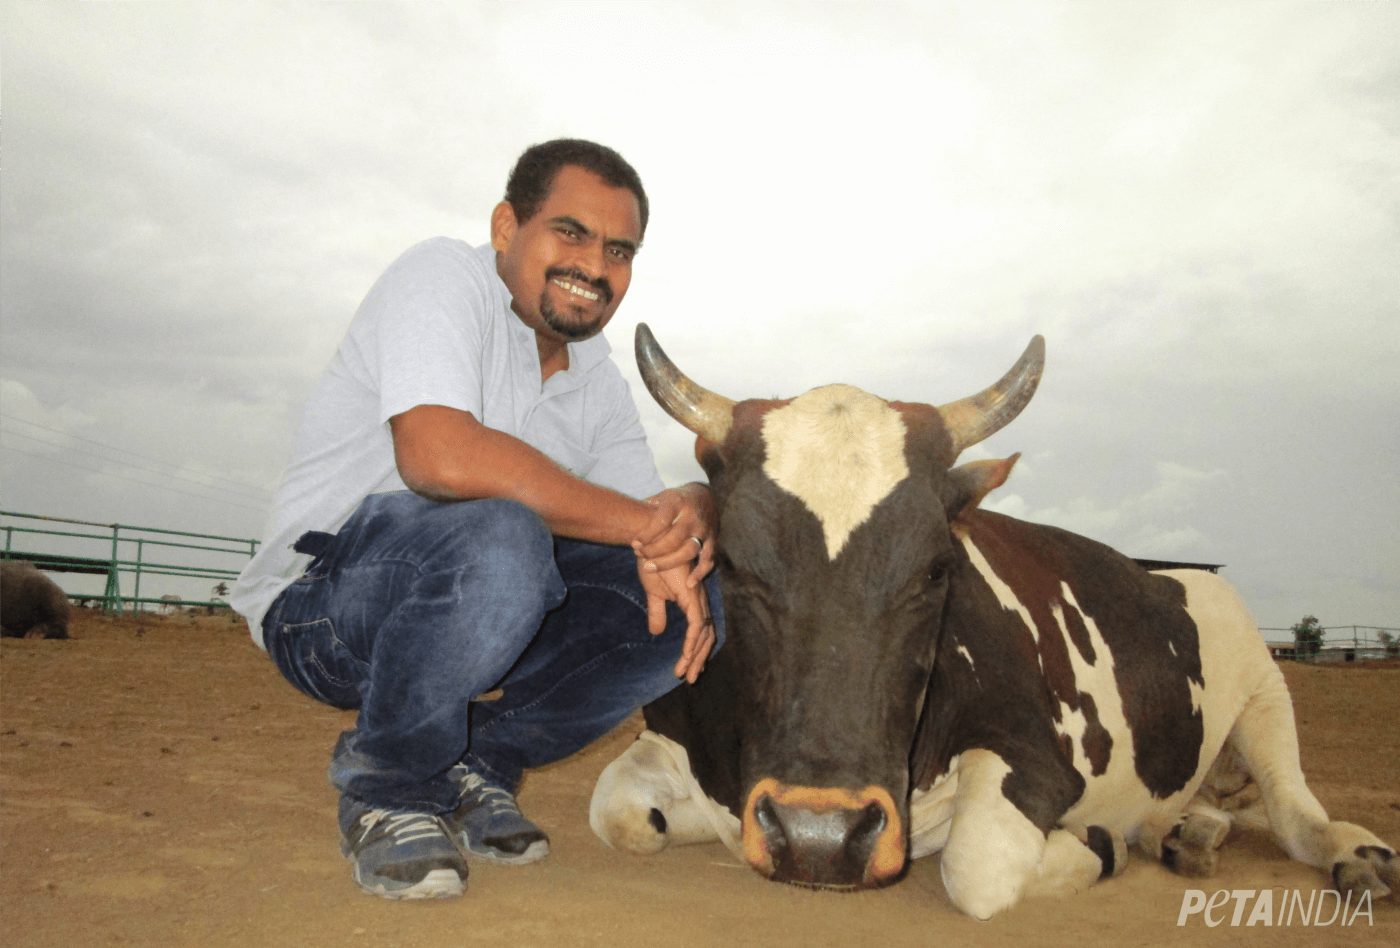 Vegan Veterinarian With 20 Years' Experience Is PETA India's New CEO - Blog  - PETA India